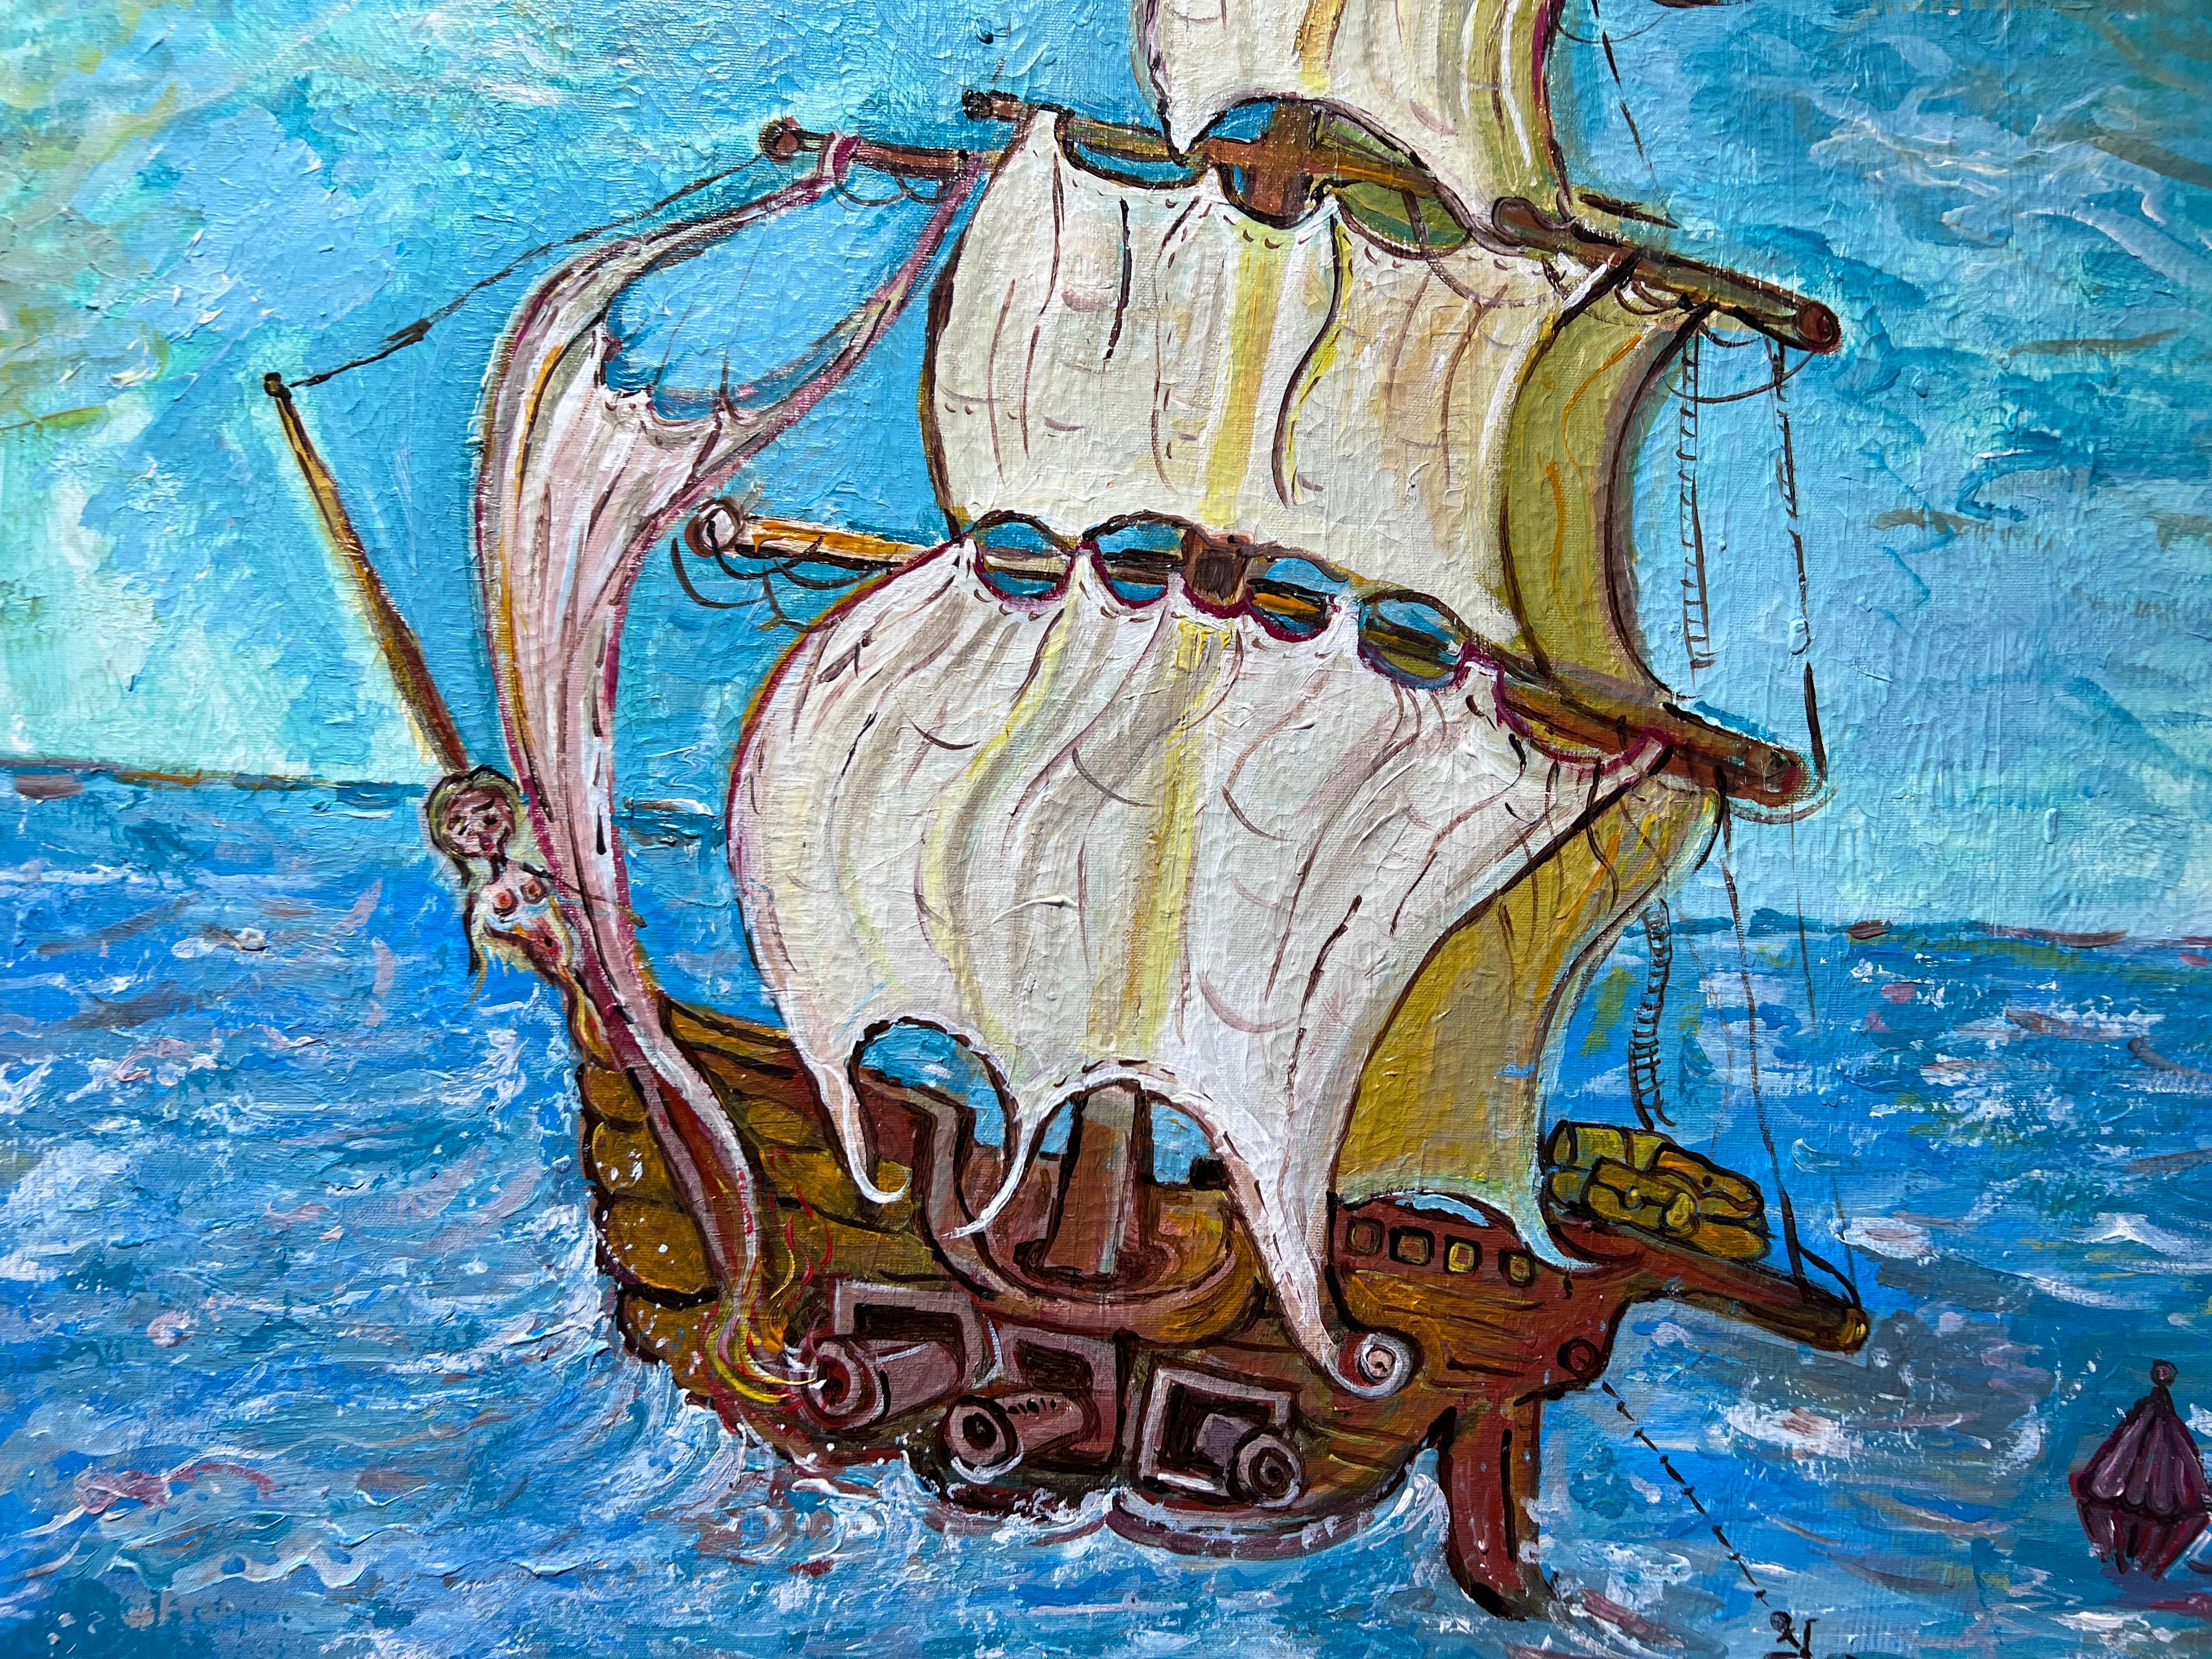 Original painting on canvas by Serg Graff, Skipper 